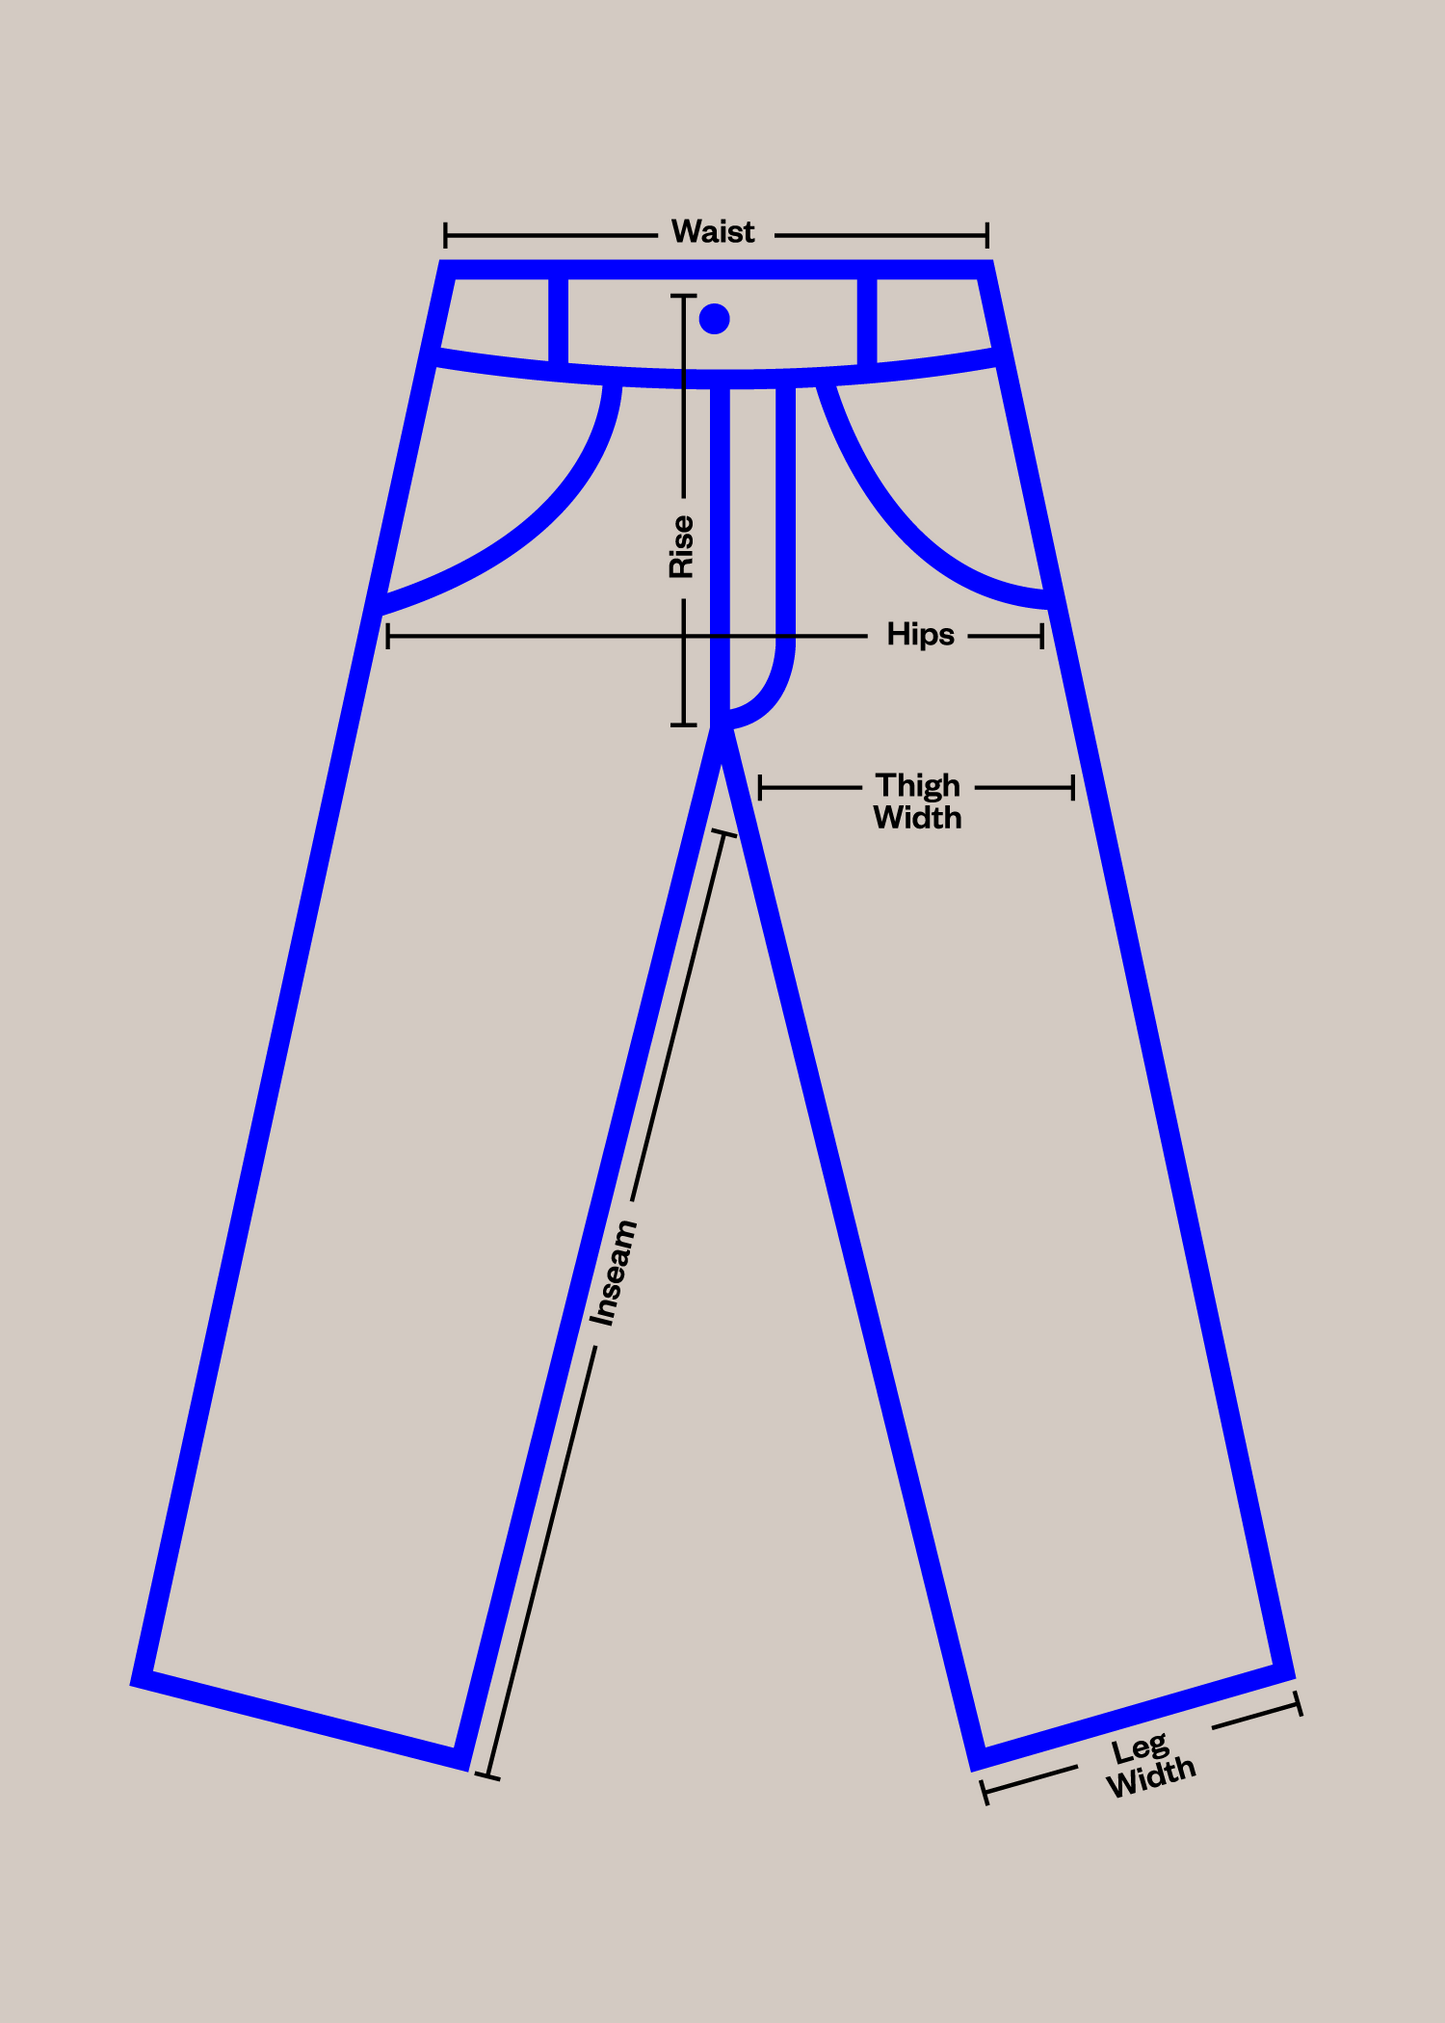 Vintage Carlton Hill Flare Corduroy Pants Size Women's 28 Men's 31